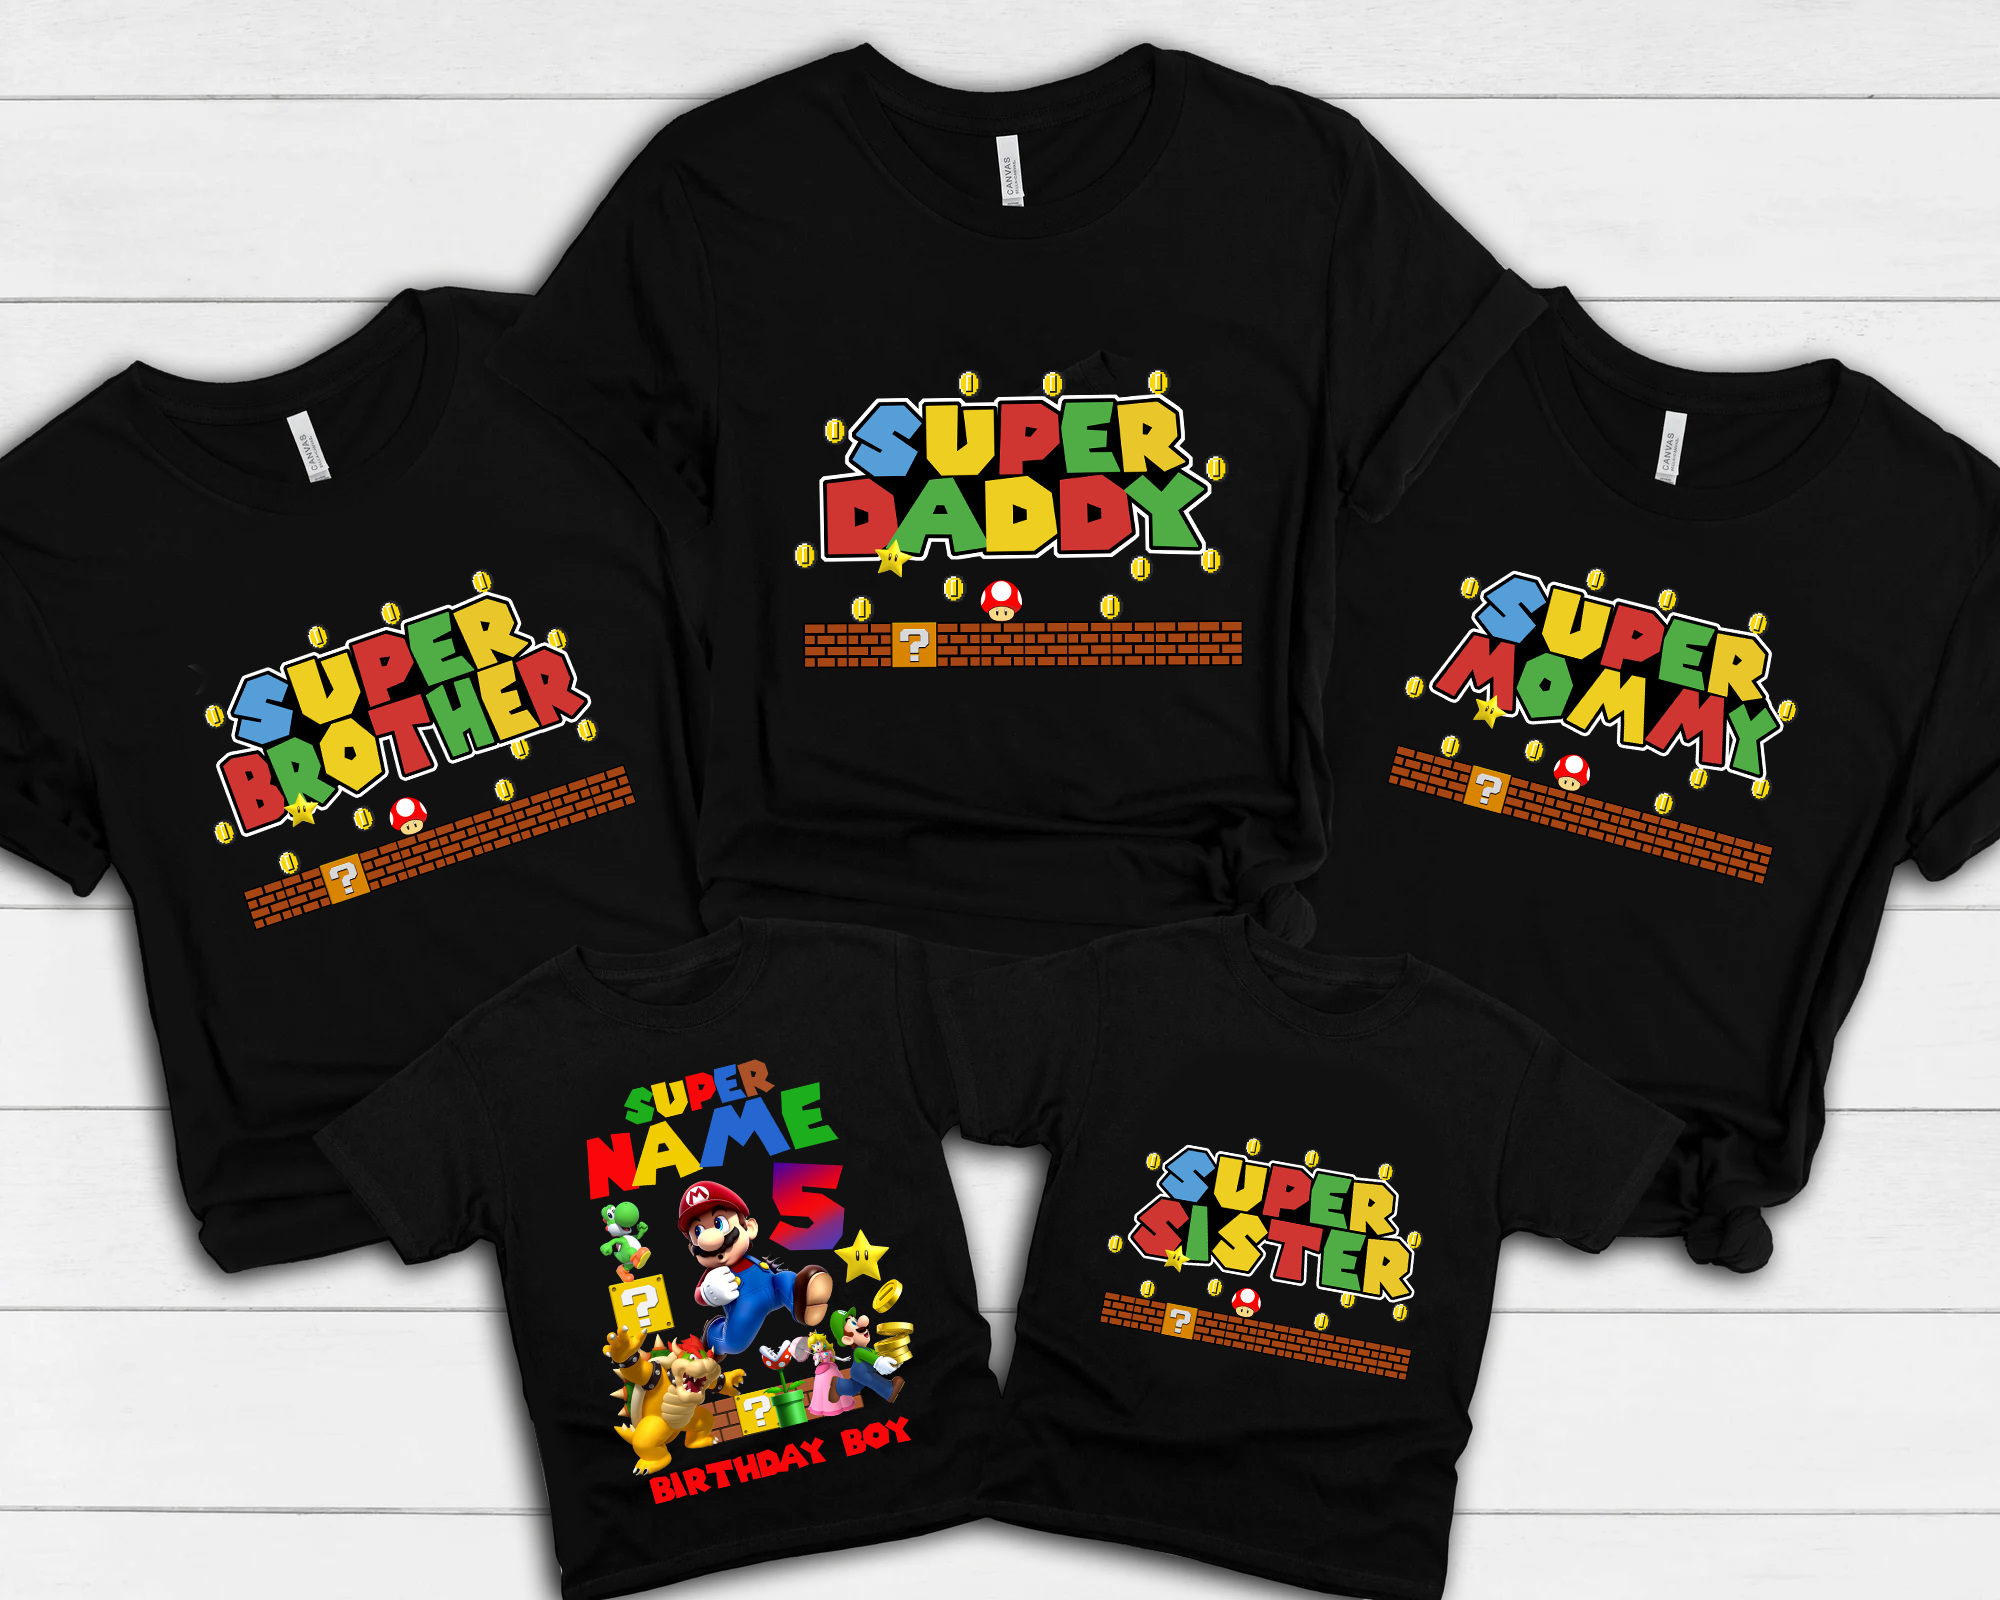 Super Mario Birthday Shirt, Super Mario Birthday, Super Mario Shirt, Super Mario Birthday Party, Super Mario Theme, Super Mario Party, Mario